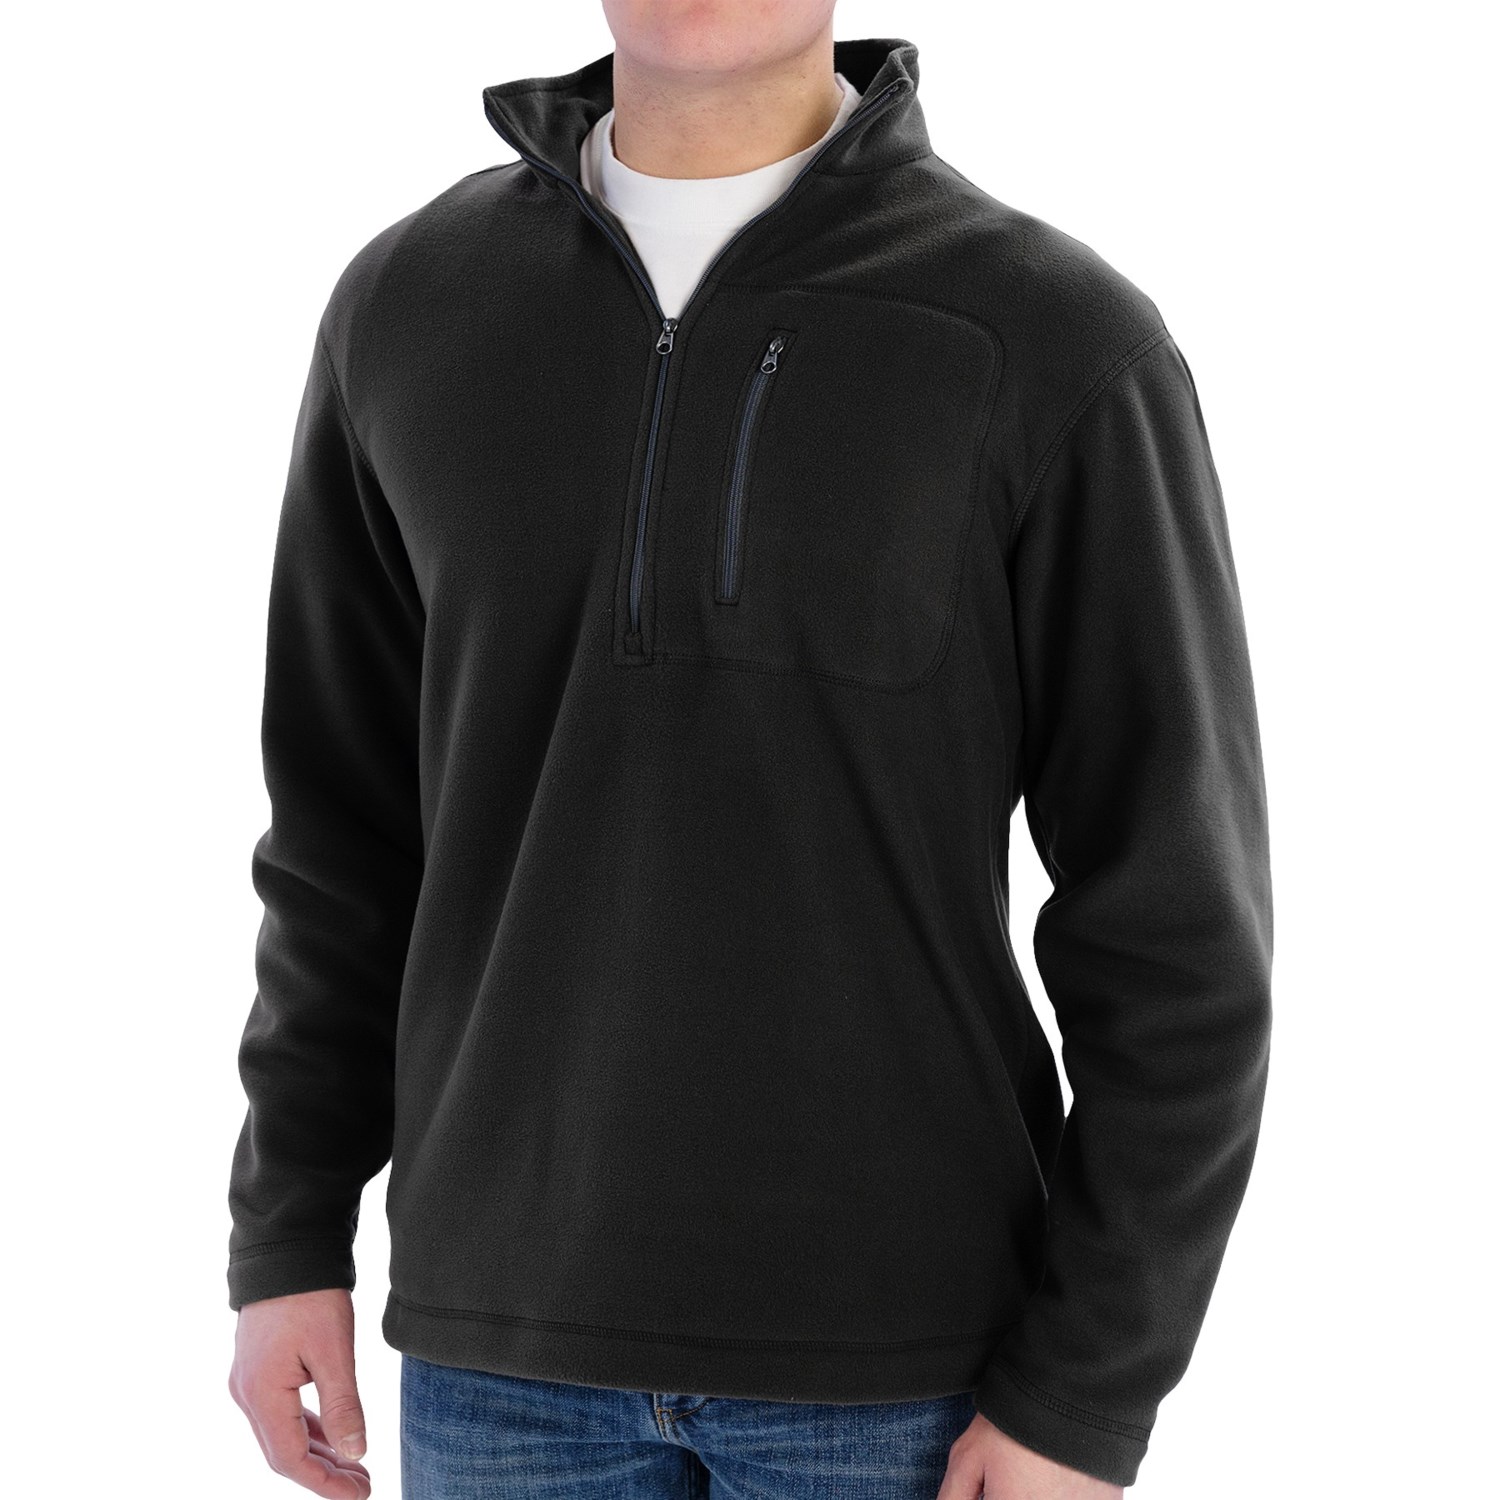 Pullover Fleece Shirt (For Men) 7844X - Save 78%